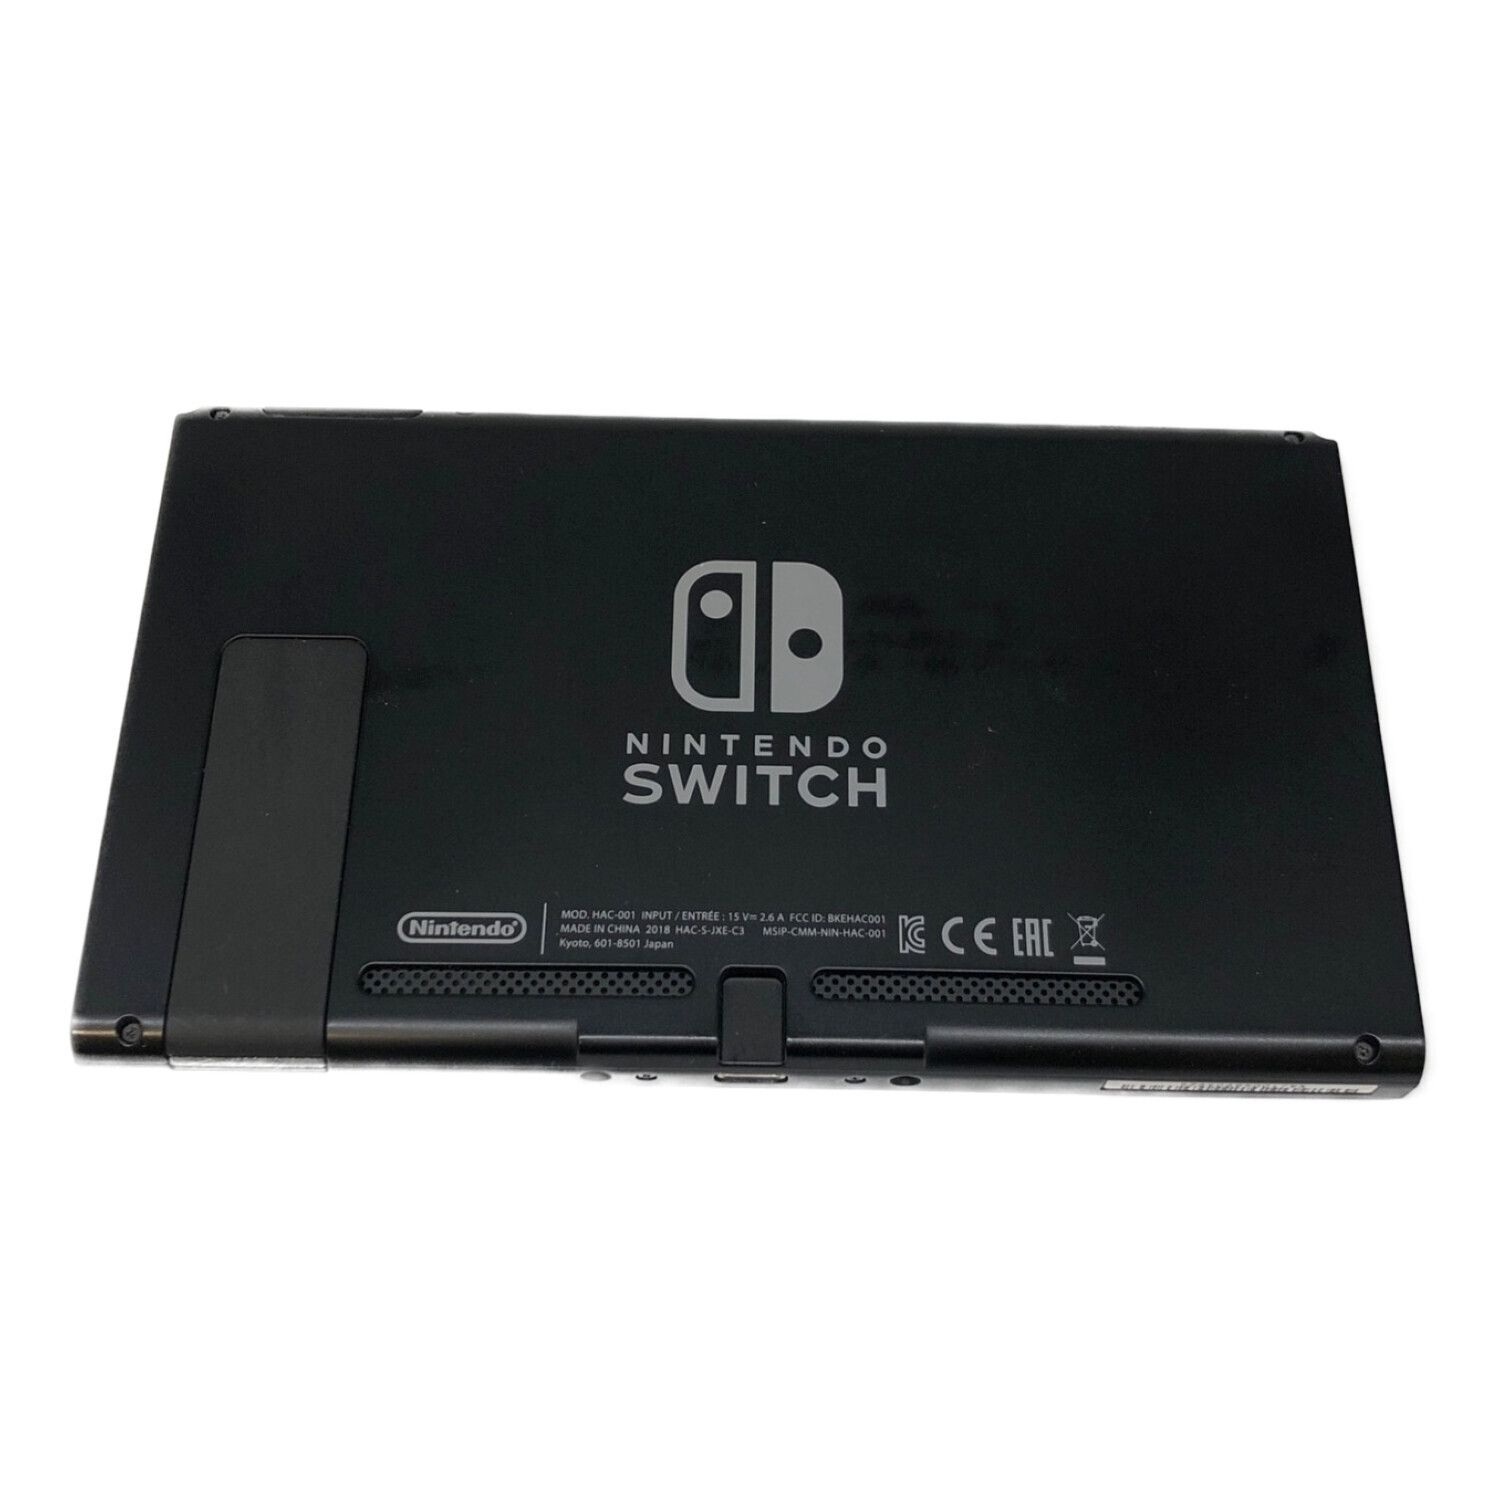 Nintendo (ニンテンドウ) Nintendo Switch HAC-001 動作確認済み 